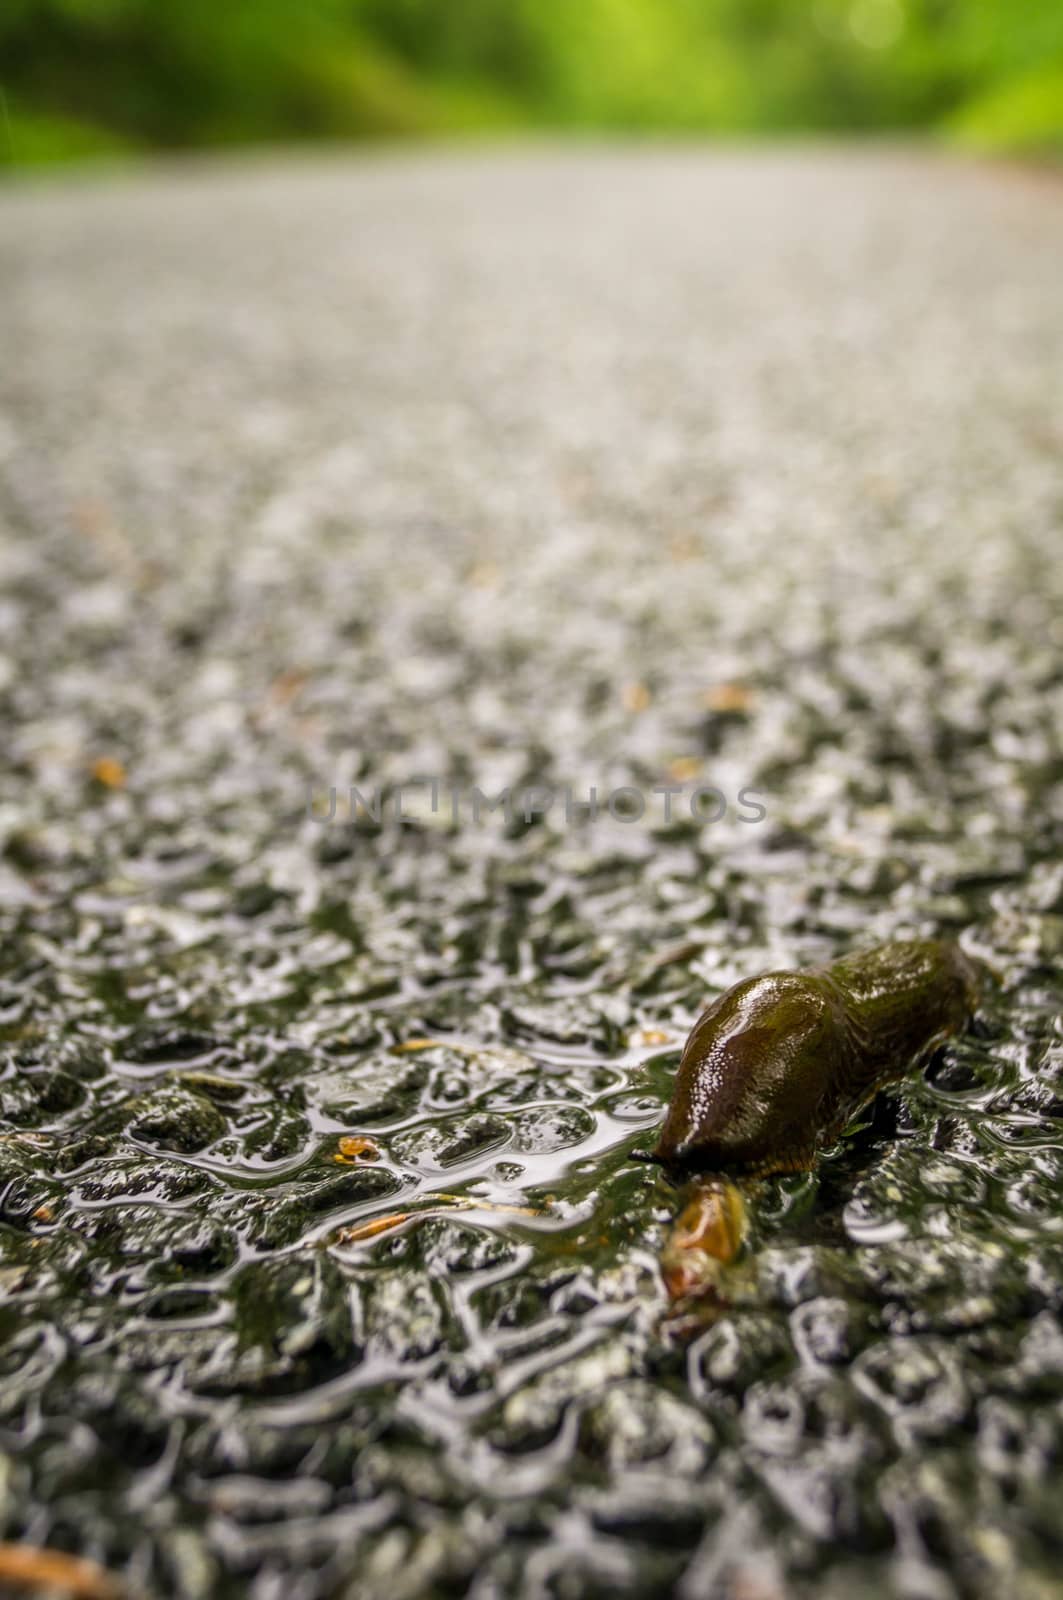 Dead slug on the road by bignoub